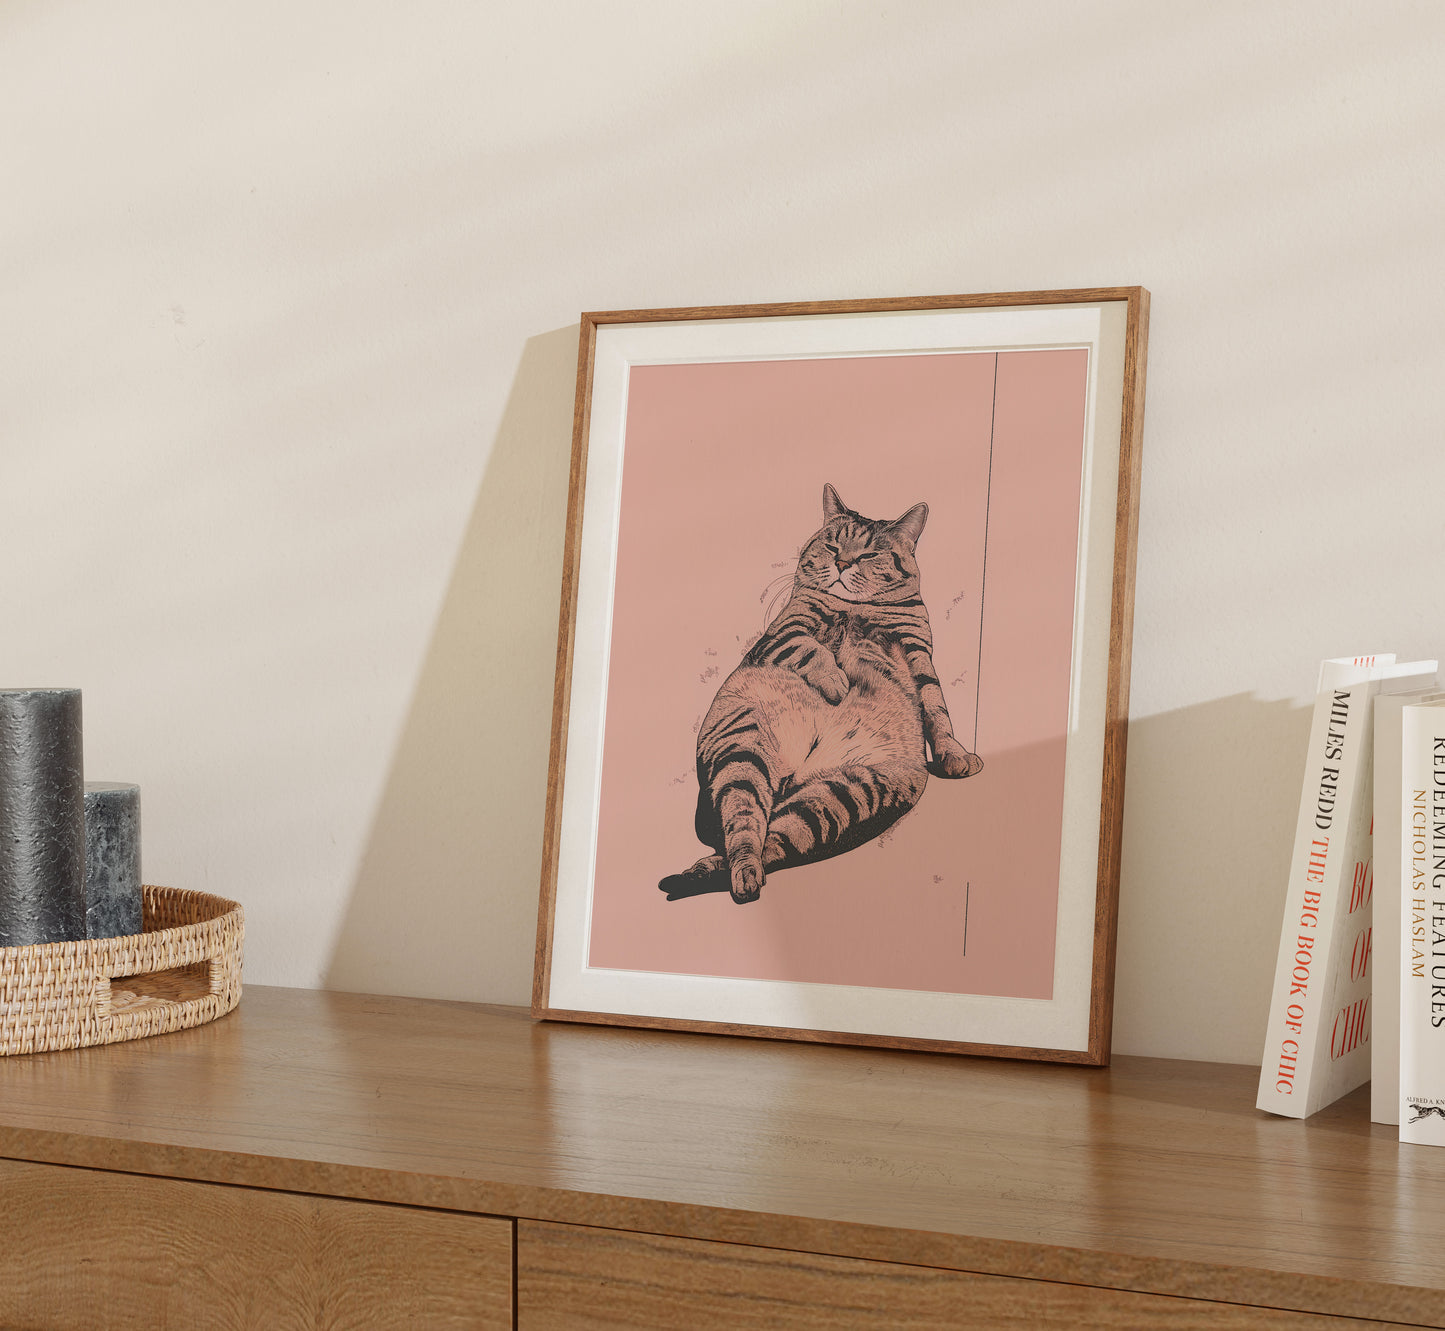 Framed illustration of a cat lying on its back displayed on a shelf.